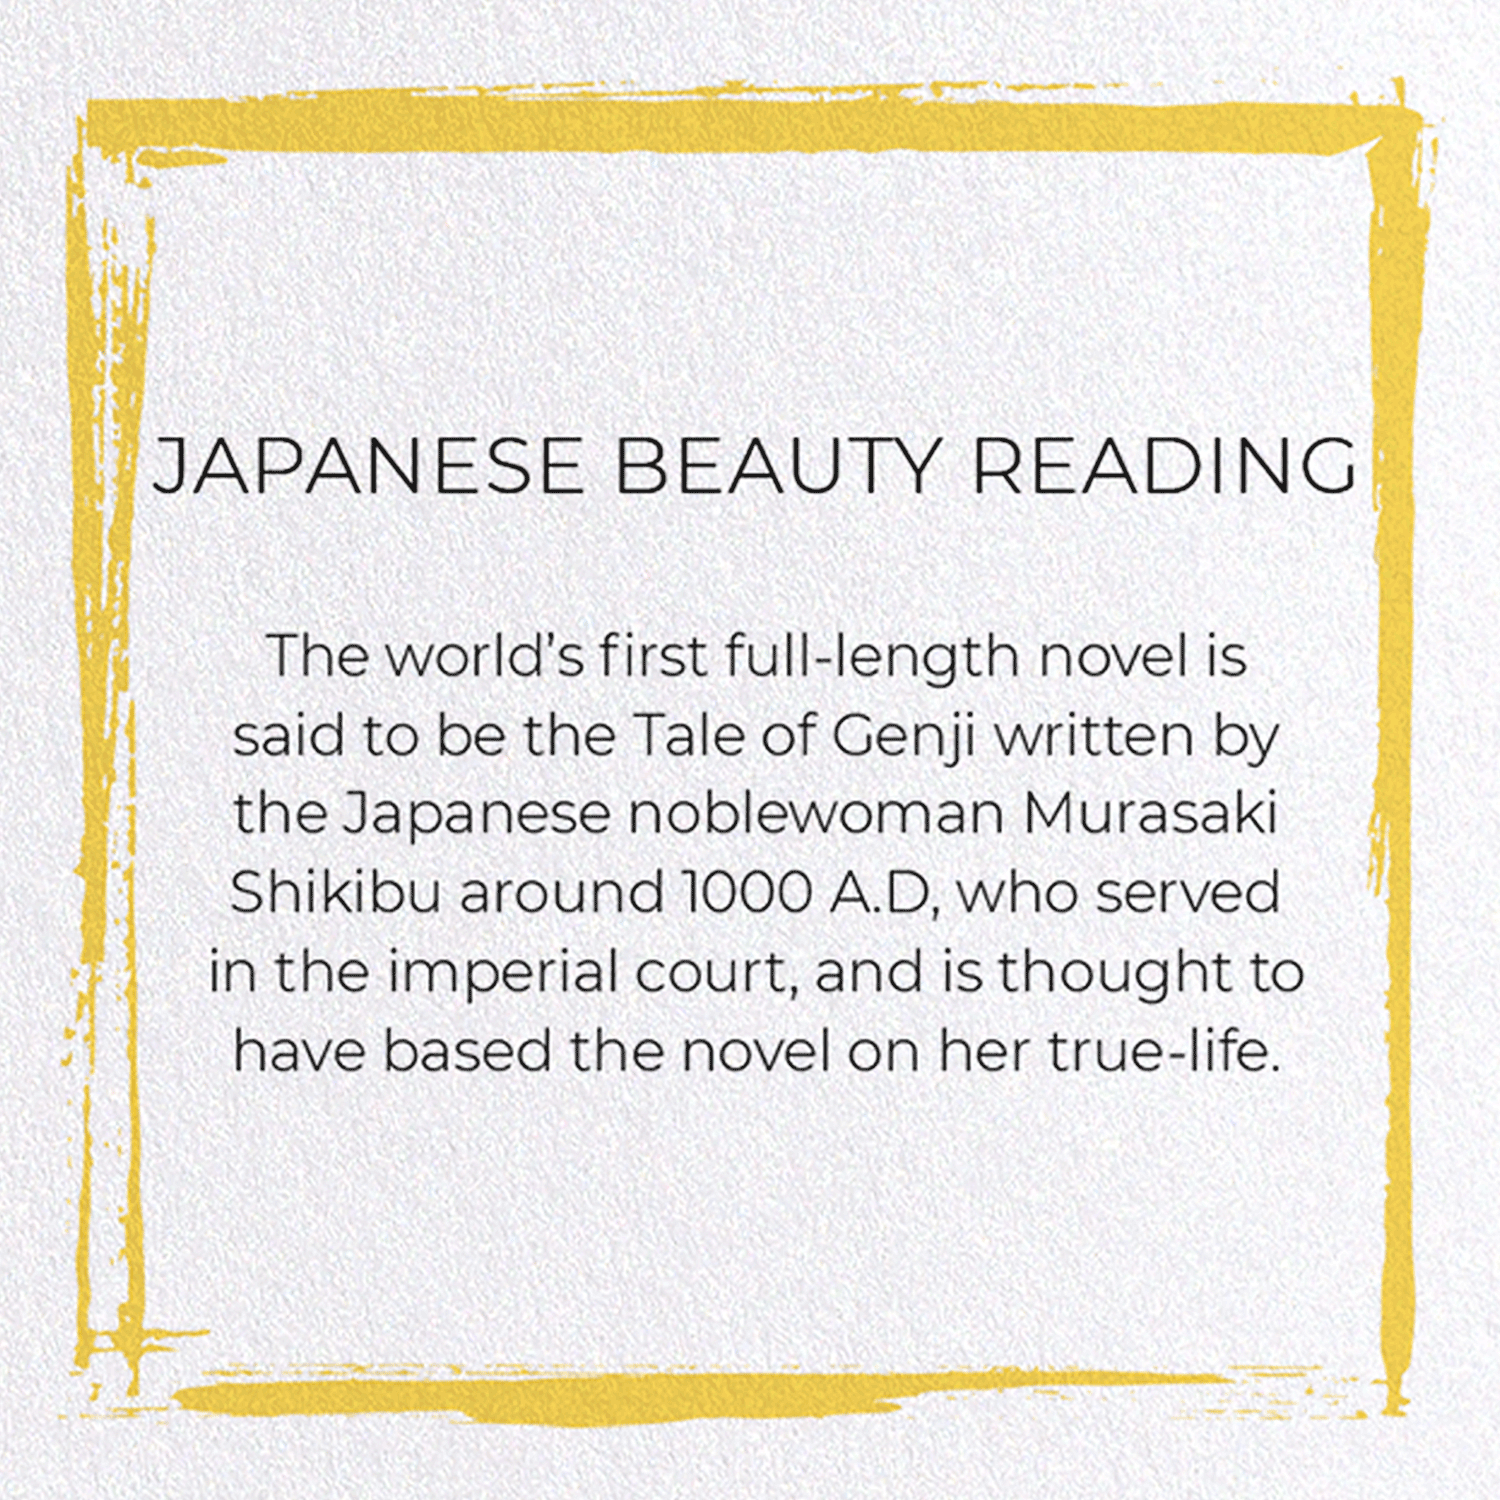 JAPANESE BEAUTY READING